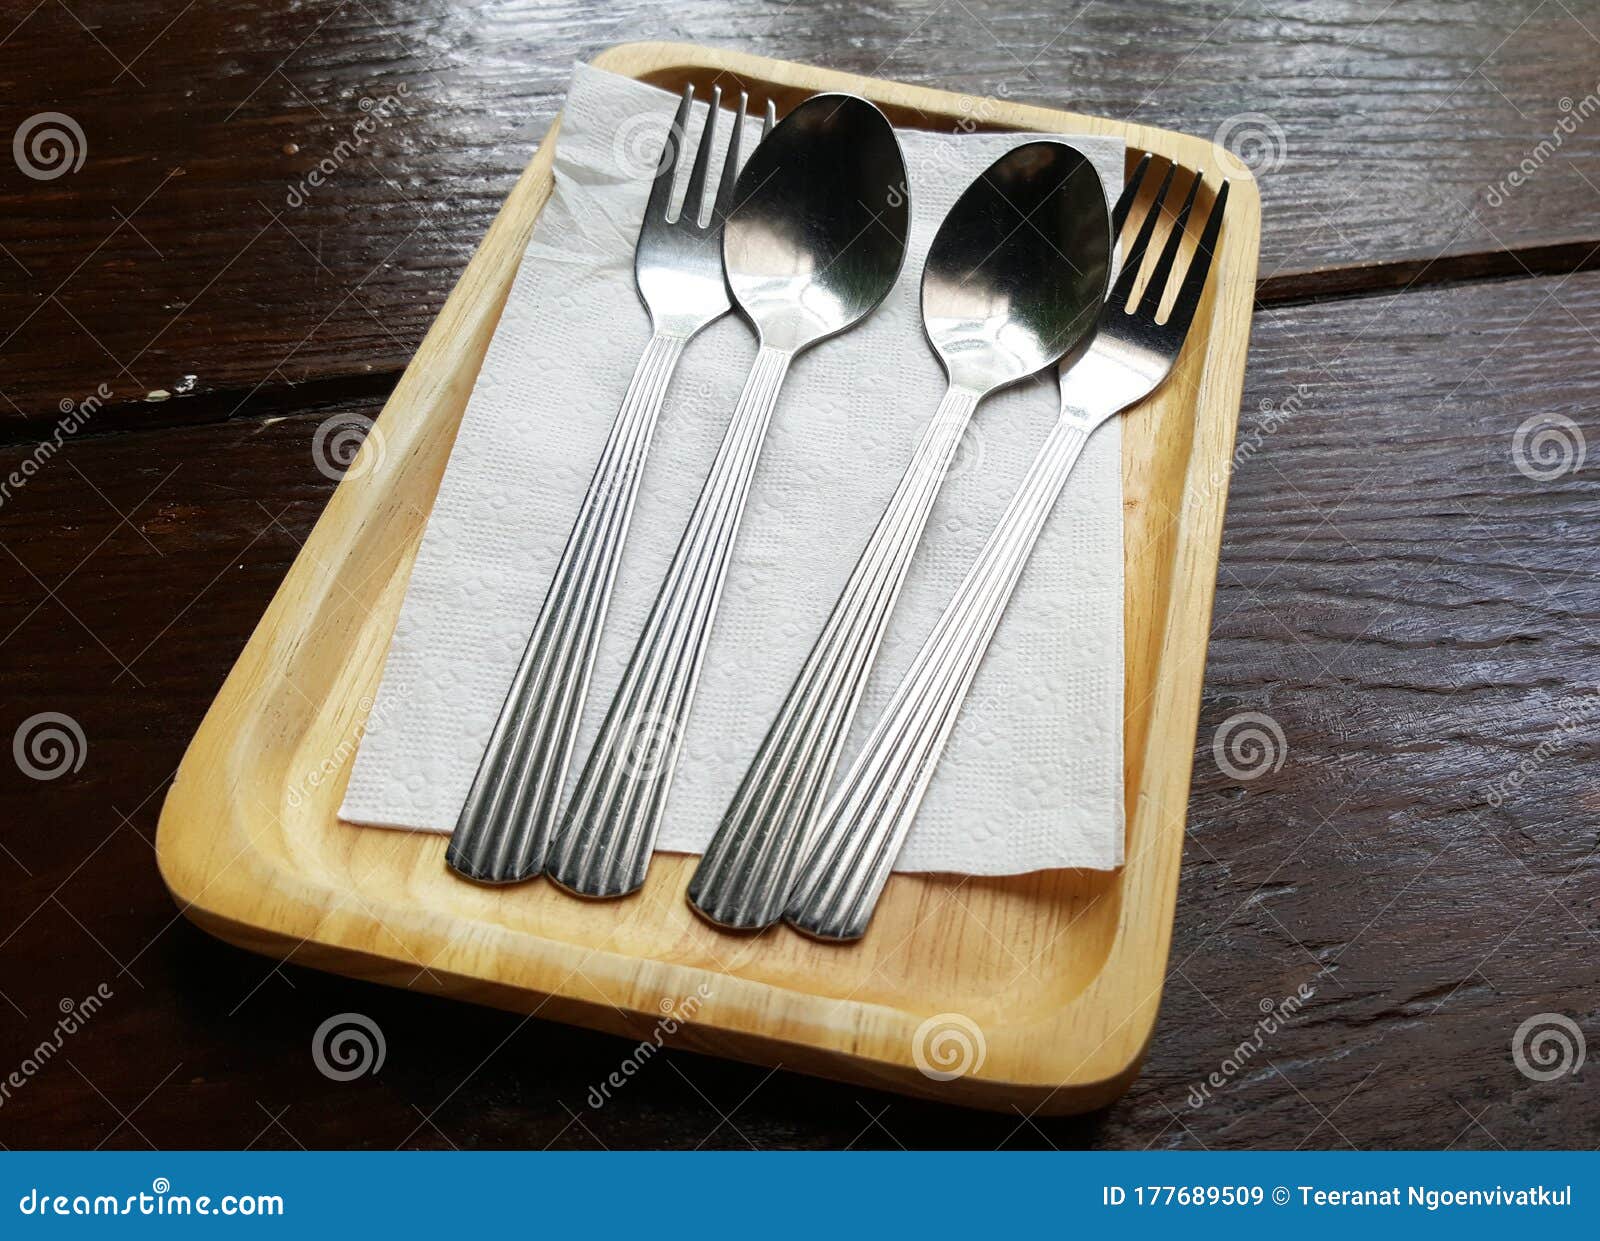 https://thumbs.dreamstime.com/z/pair-cutlery-silverware-spoon-fork-rectangle-serving-wooden-tray-dark-brown-table-fresh-market-gourmet-restaurant-177689509.jpg